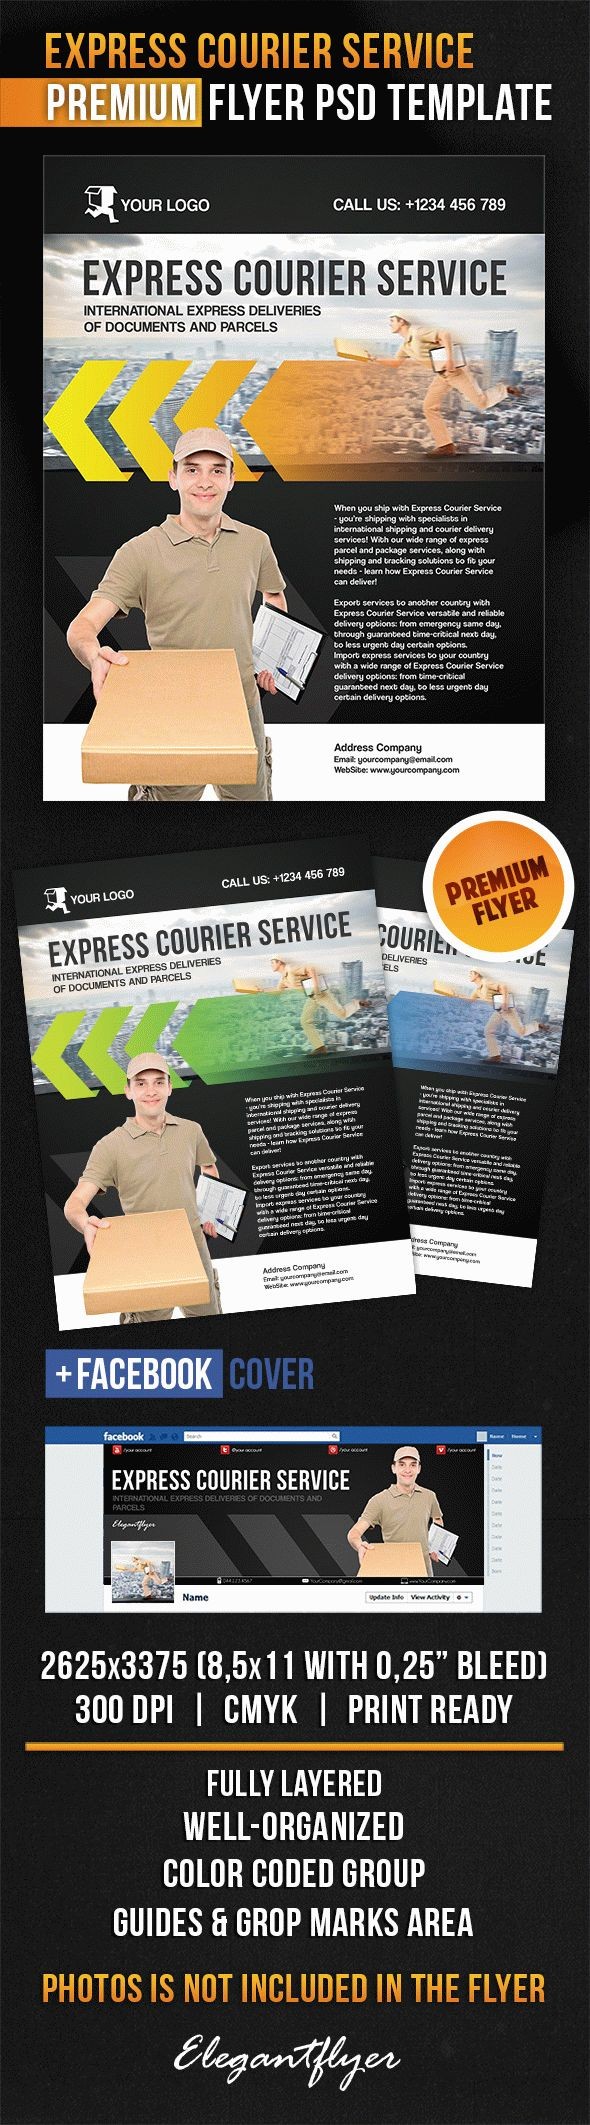 Express Courier Service by ElegantFlyer